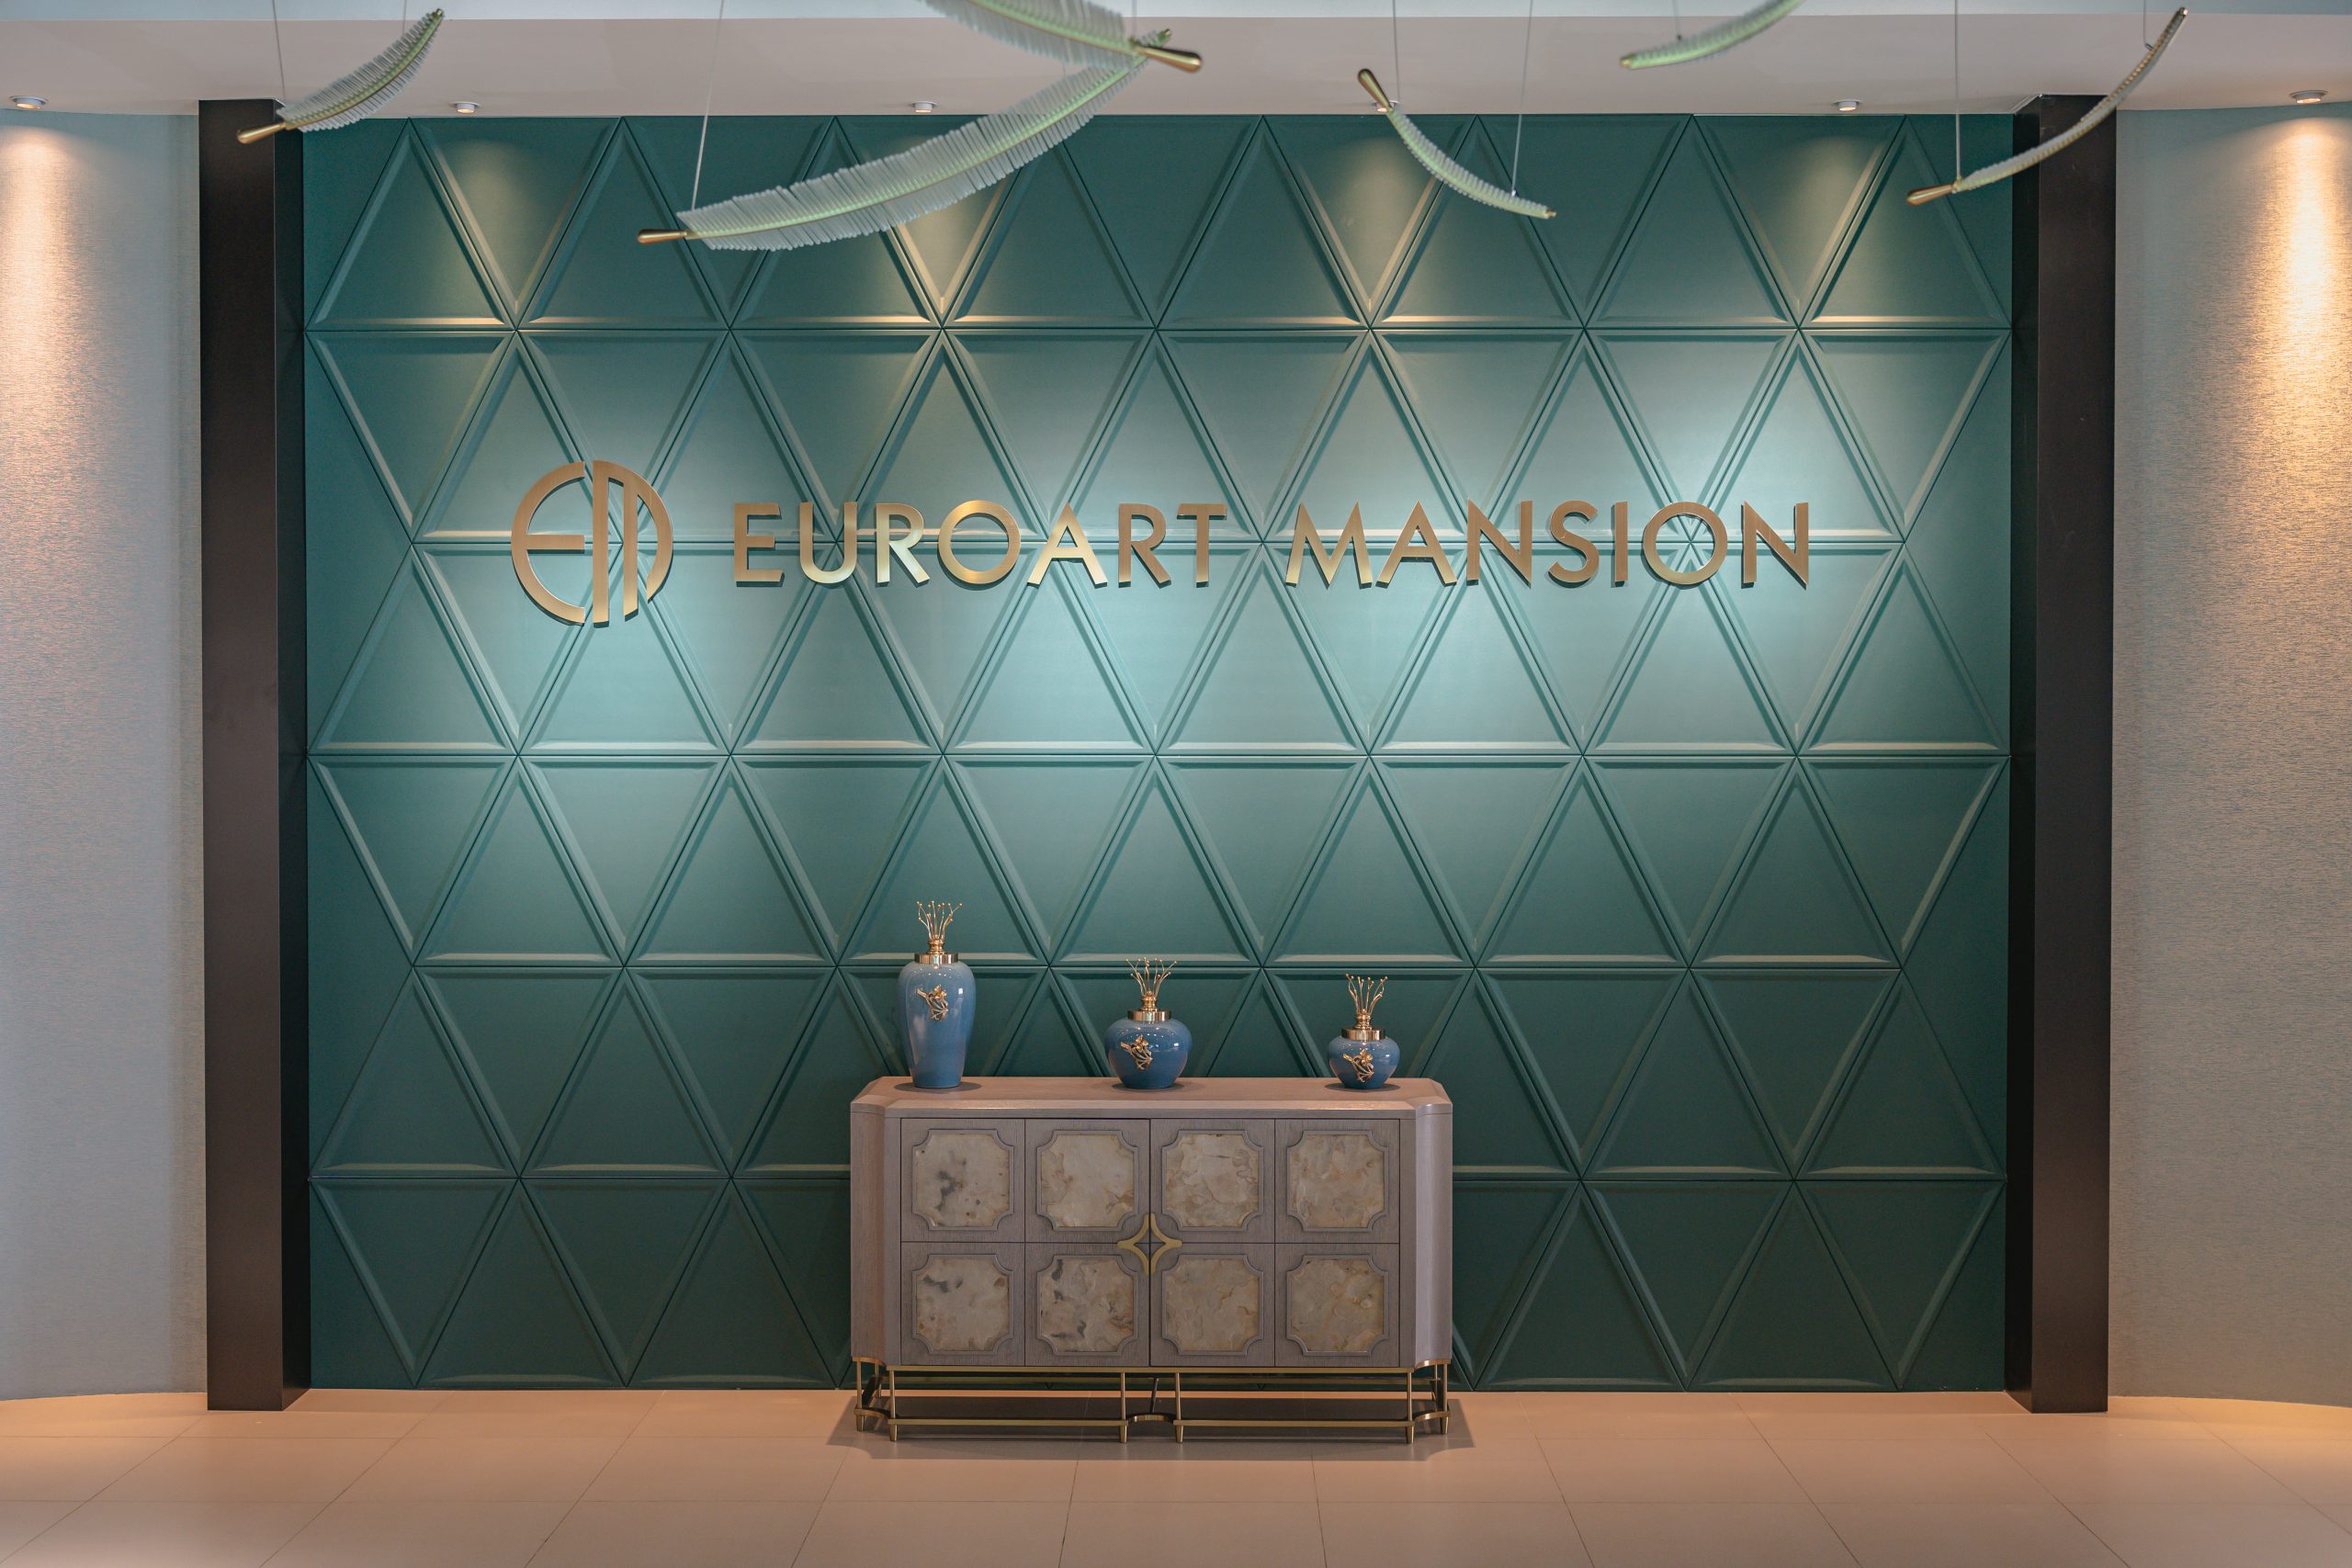 Euroart Mansion showroom